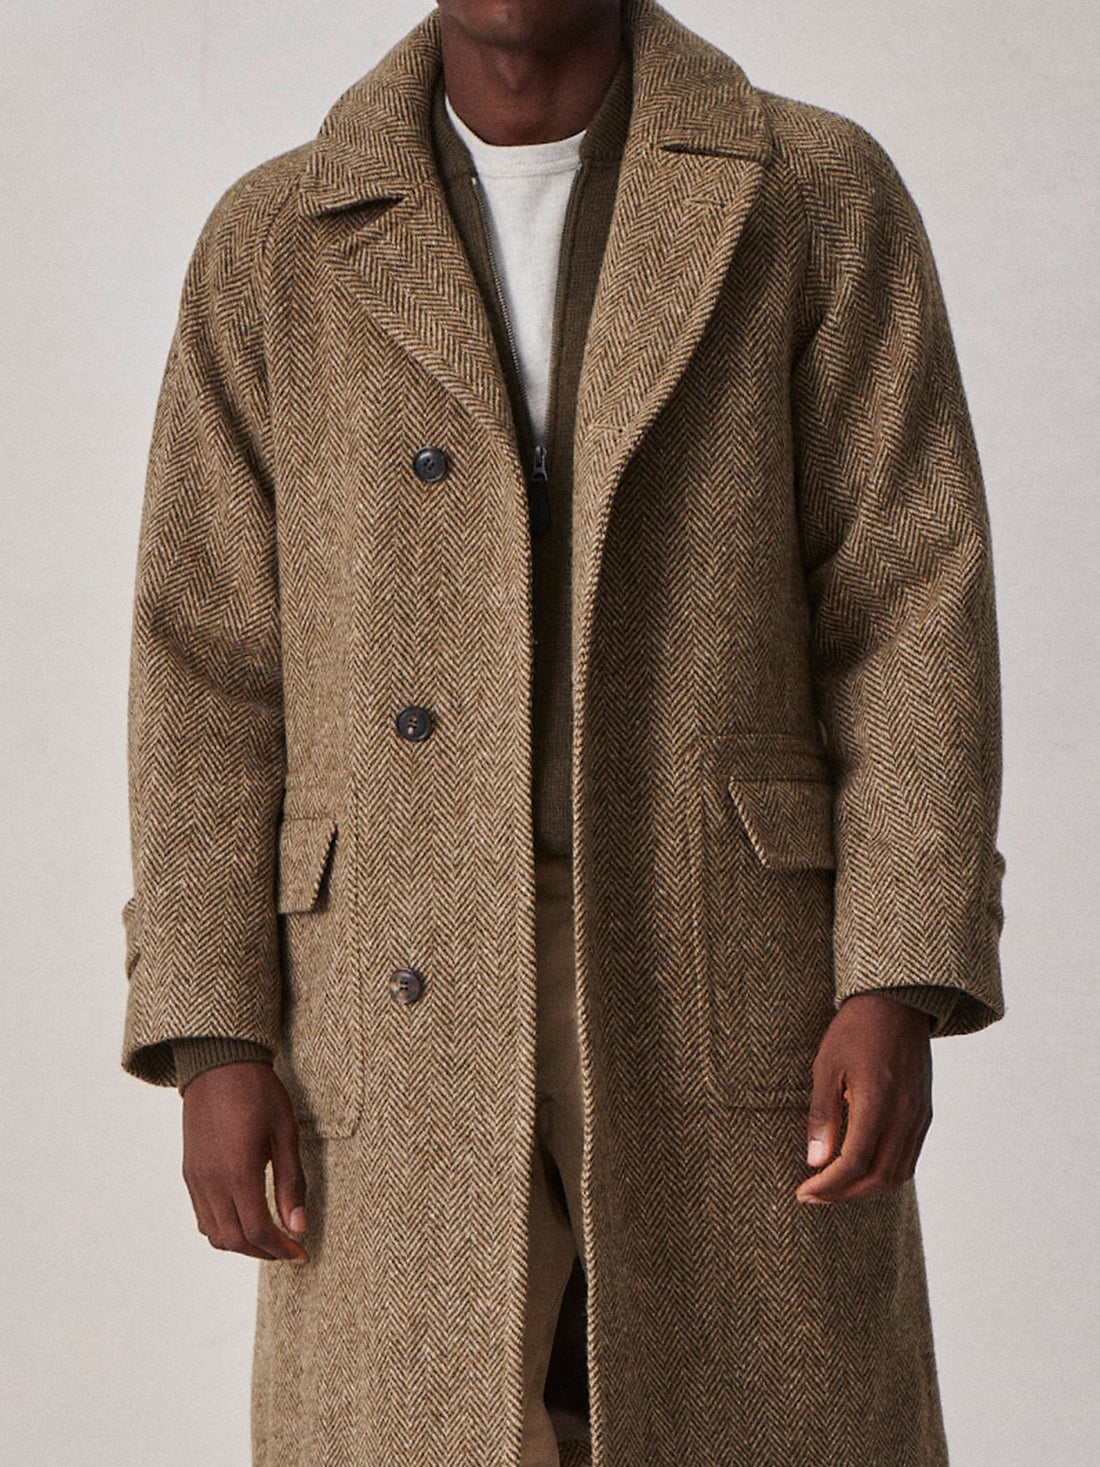 Men’s Vintage Style Jackets & Coats 1920s-1970s DONEGAL CHEVRON TWEED BALMACAAN COAT buck mason  AT vintagedancer.com